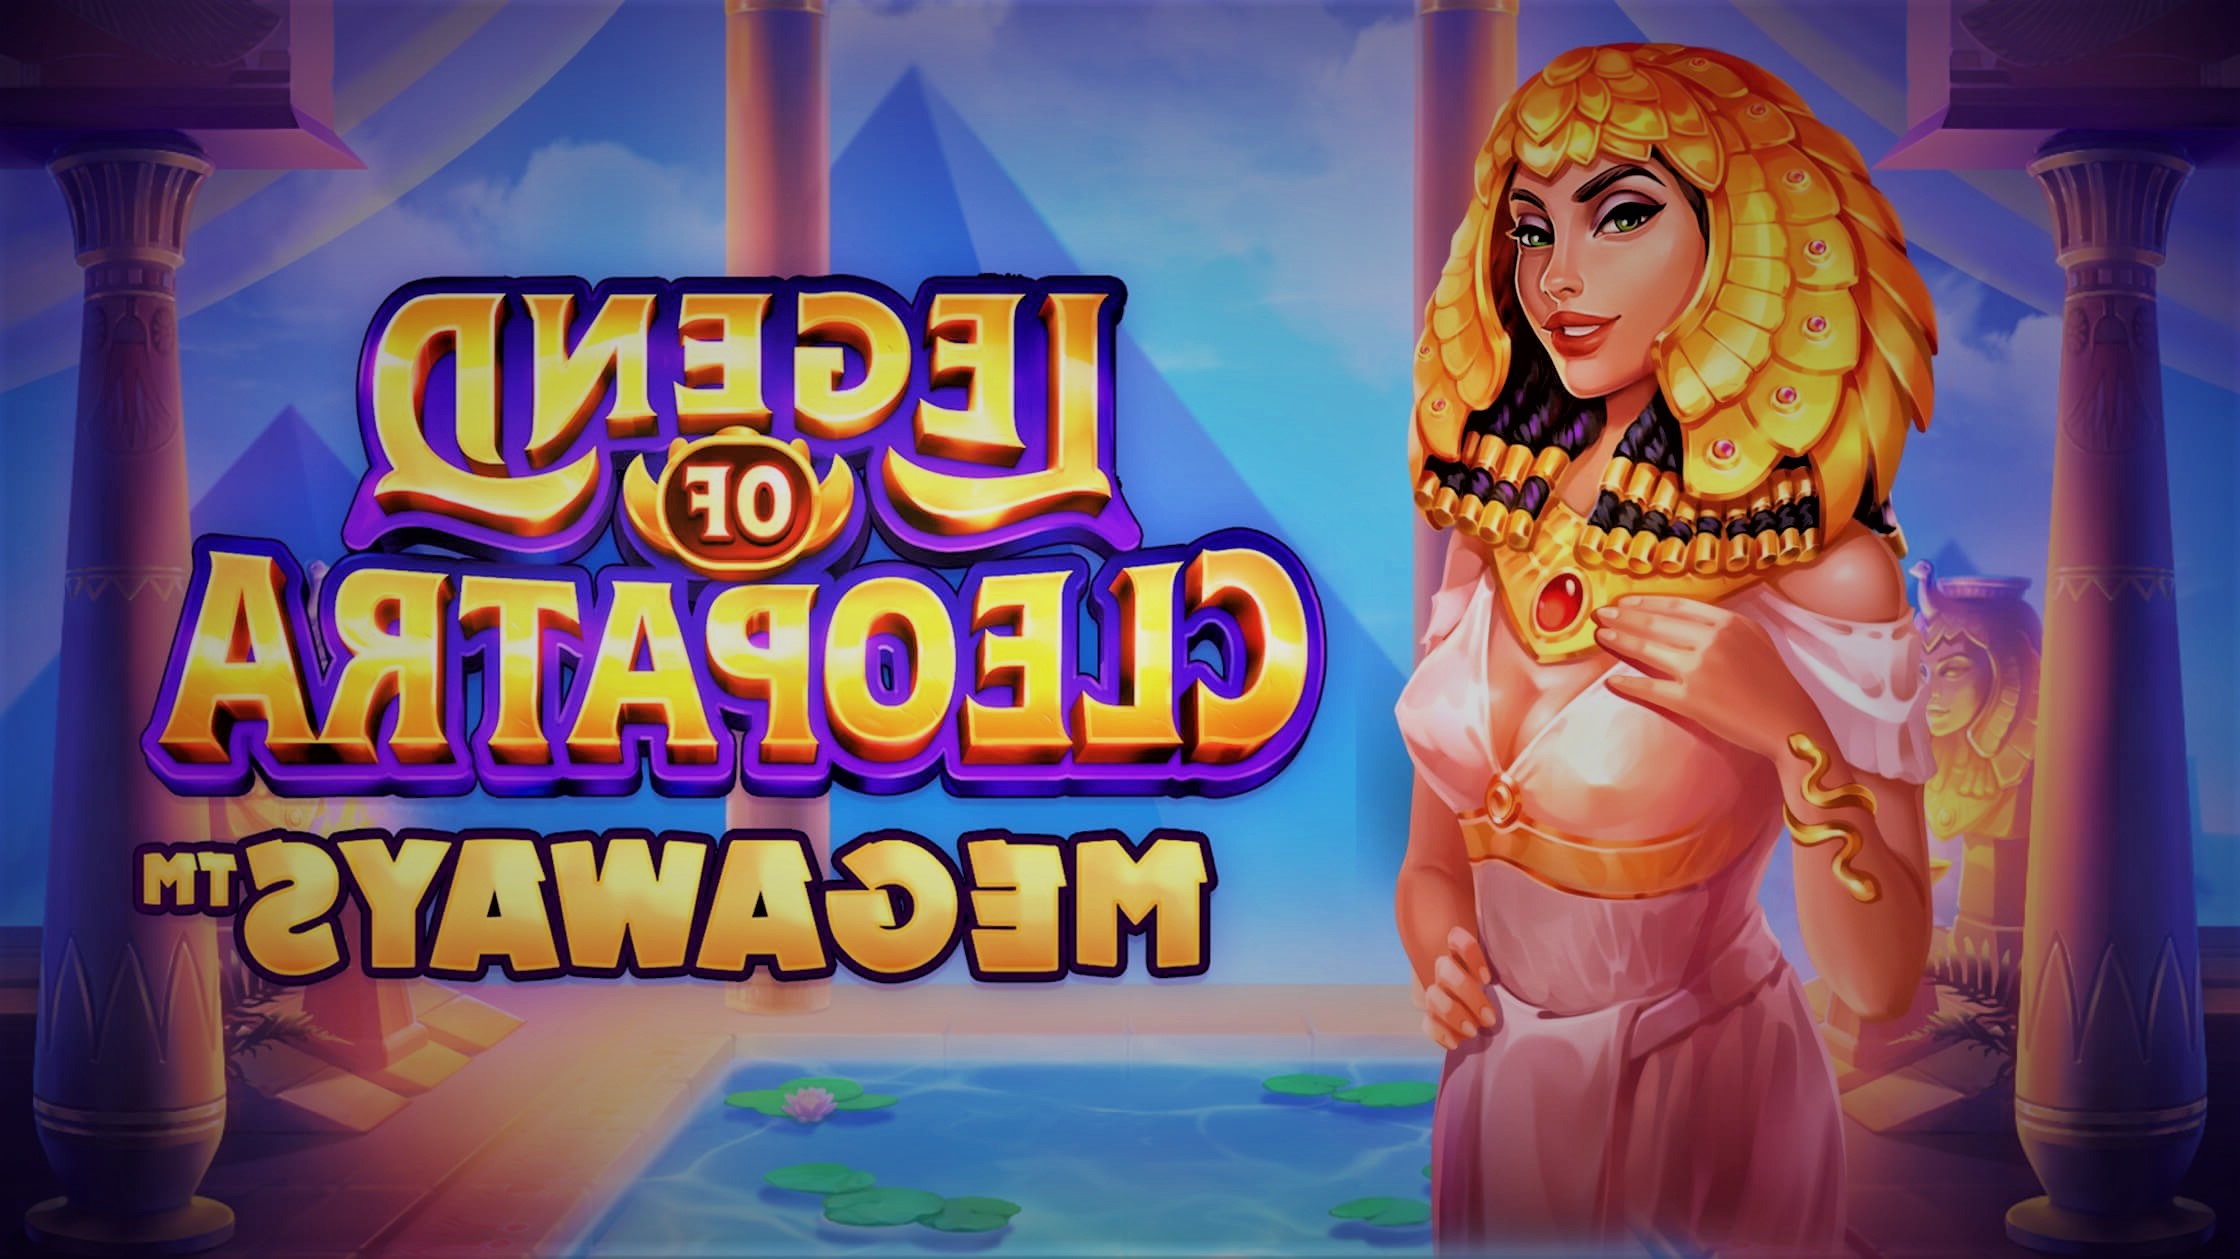 Menguak Misteri Mesir Kuno Legend Of Cleopatra Megaways dari Playson